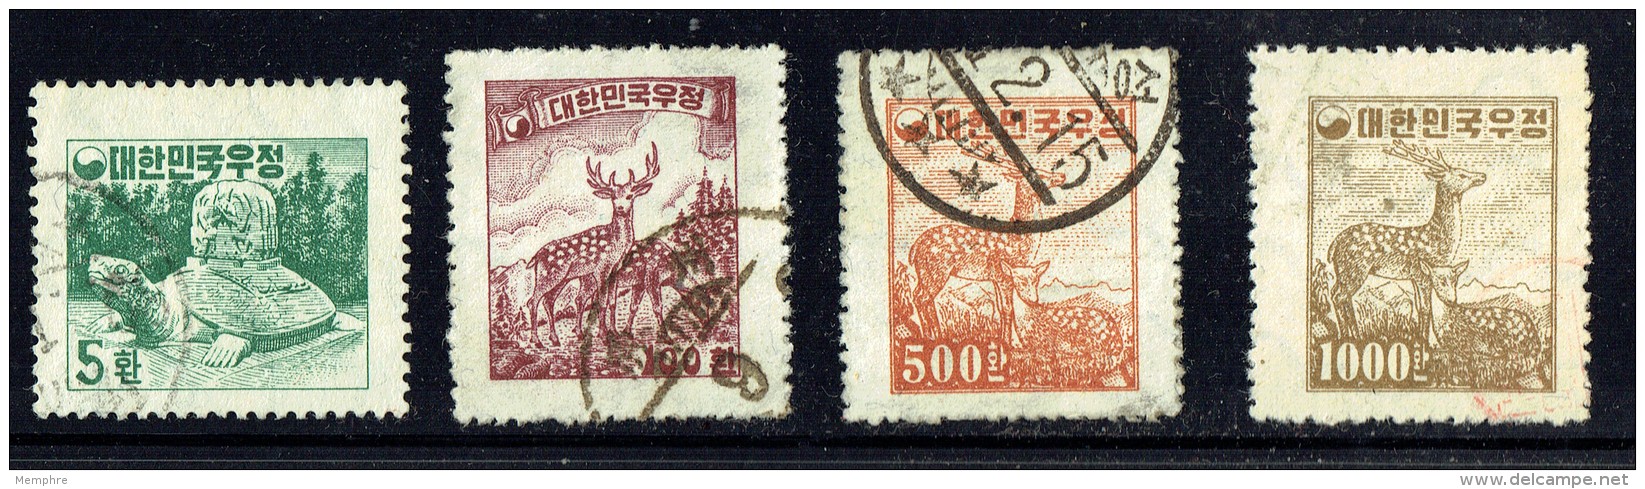 1954  New Definitives  Sc 196-9  Used - Korea (Süd-)